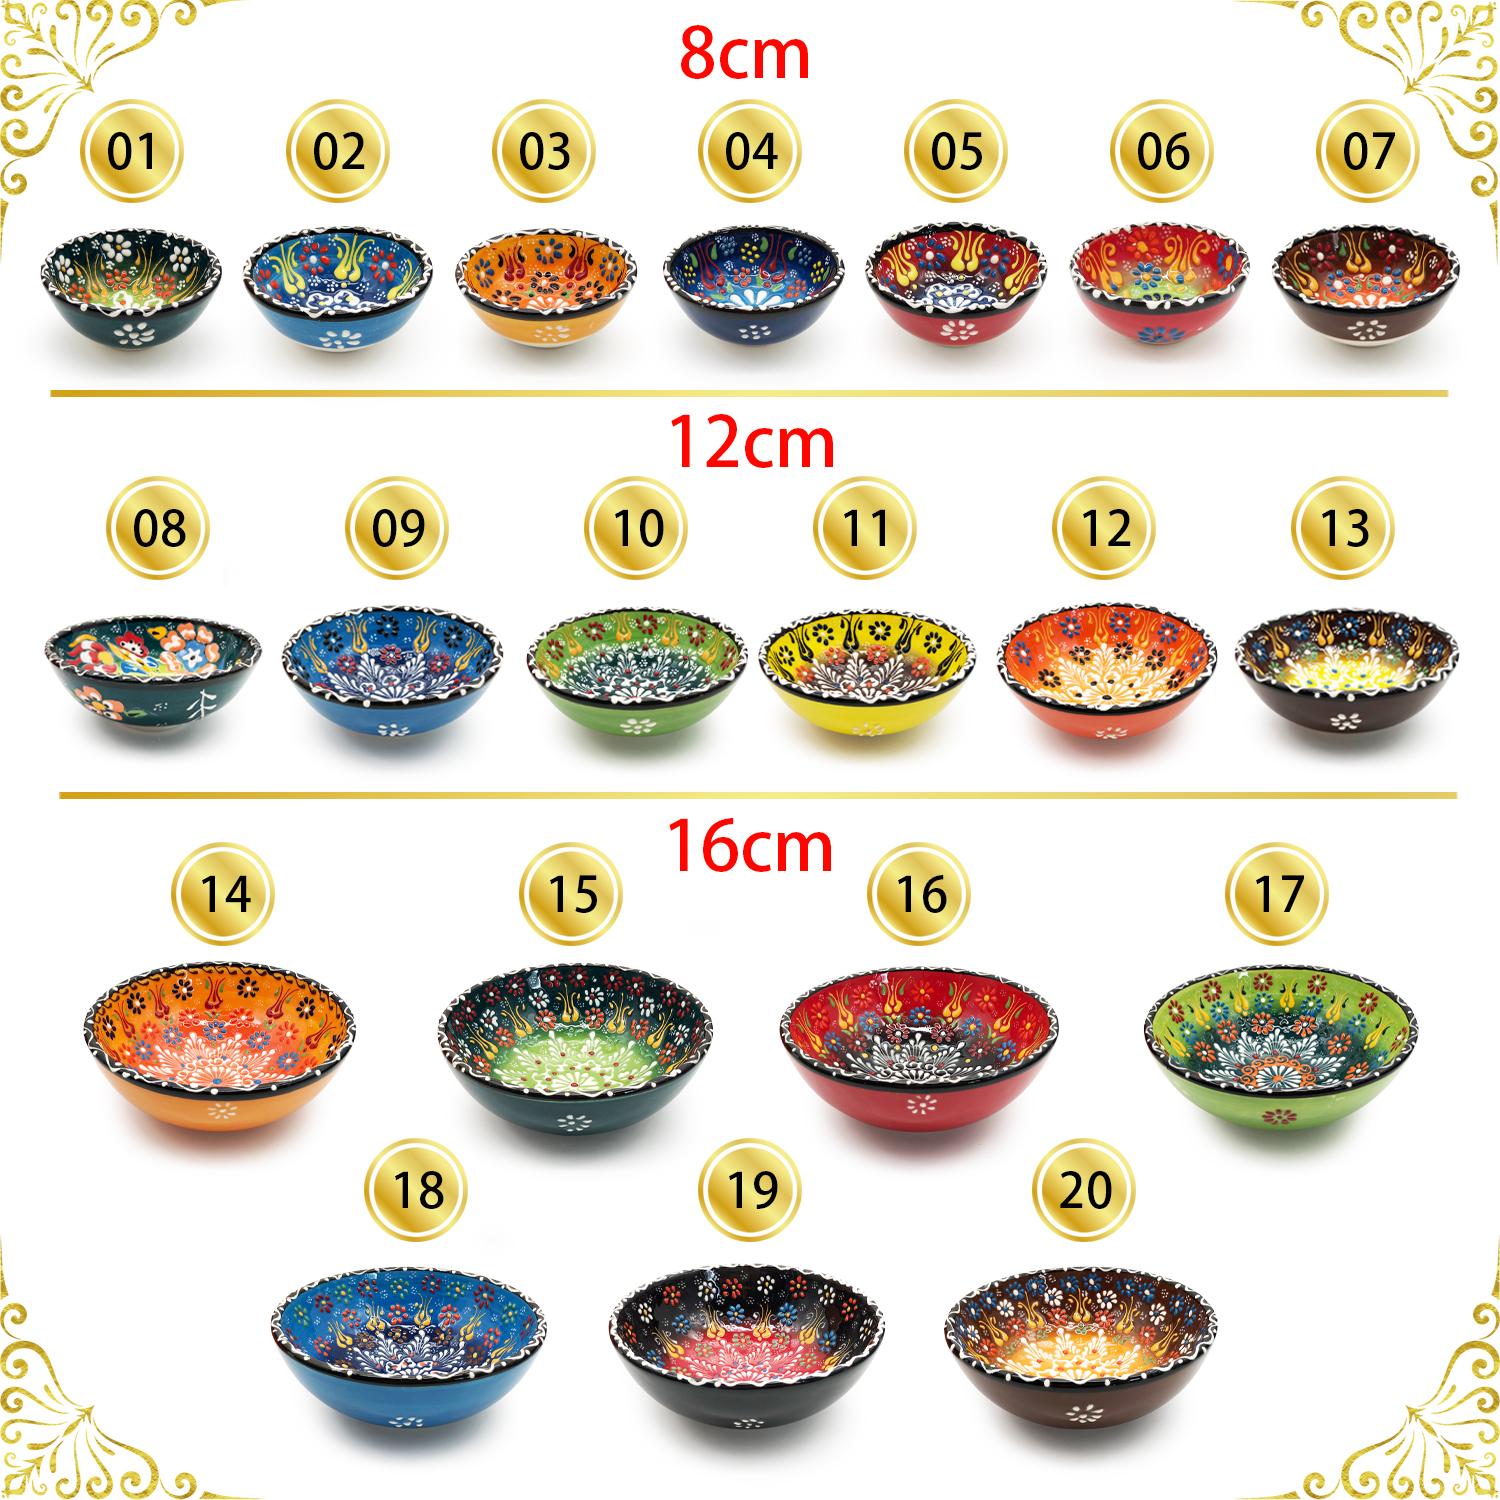 80MM手繪土耳其傳統工藝陶瓷碗， 土耳其餐具奧斯曼帝國浮雕圖案土耳其藝術時尚潮物(VTR-CERAMIC-BOWL-80MM-30004)